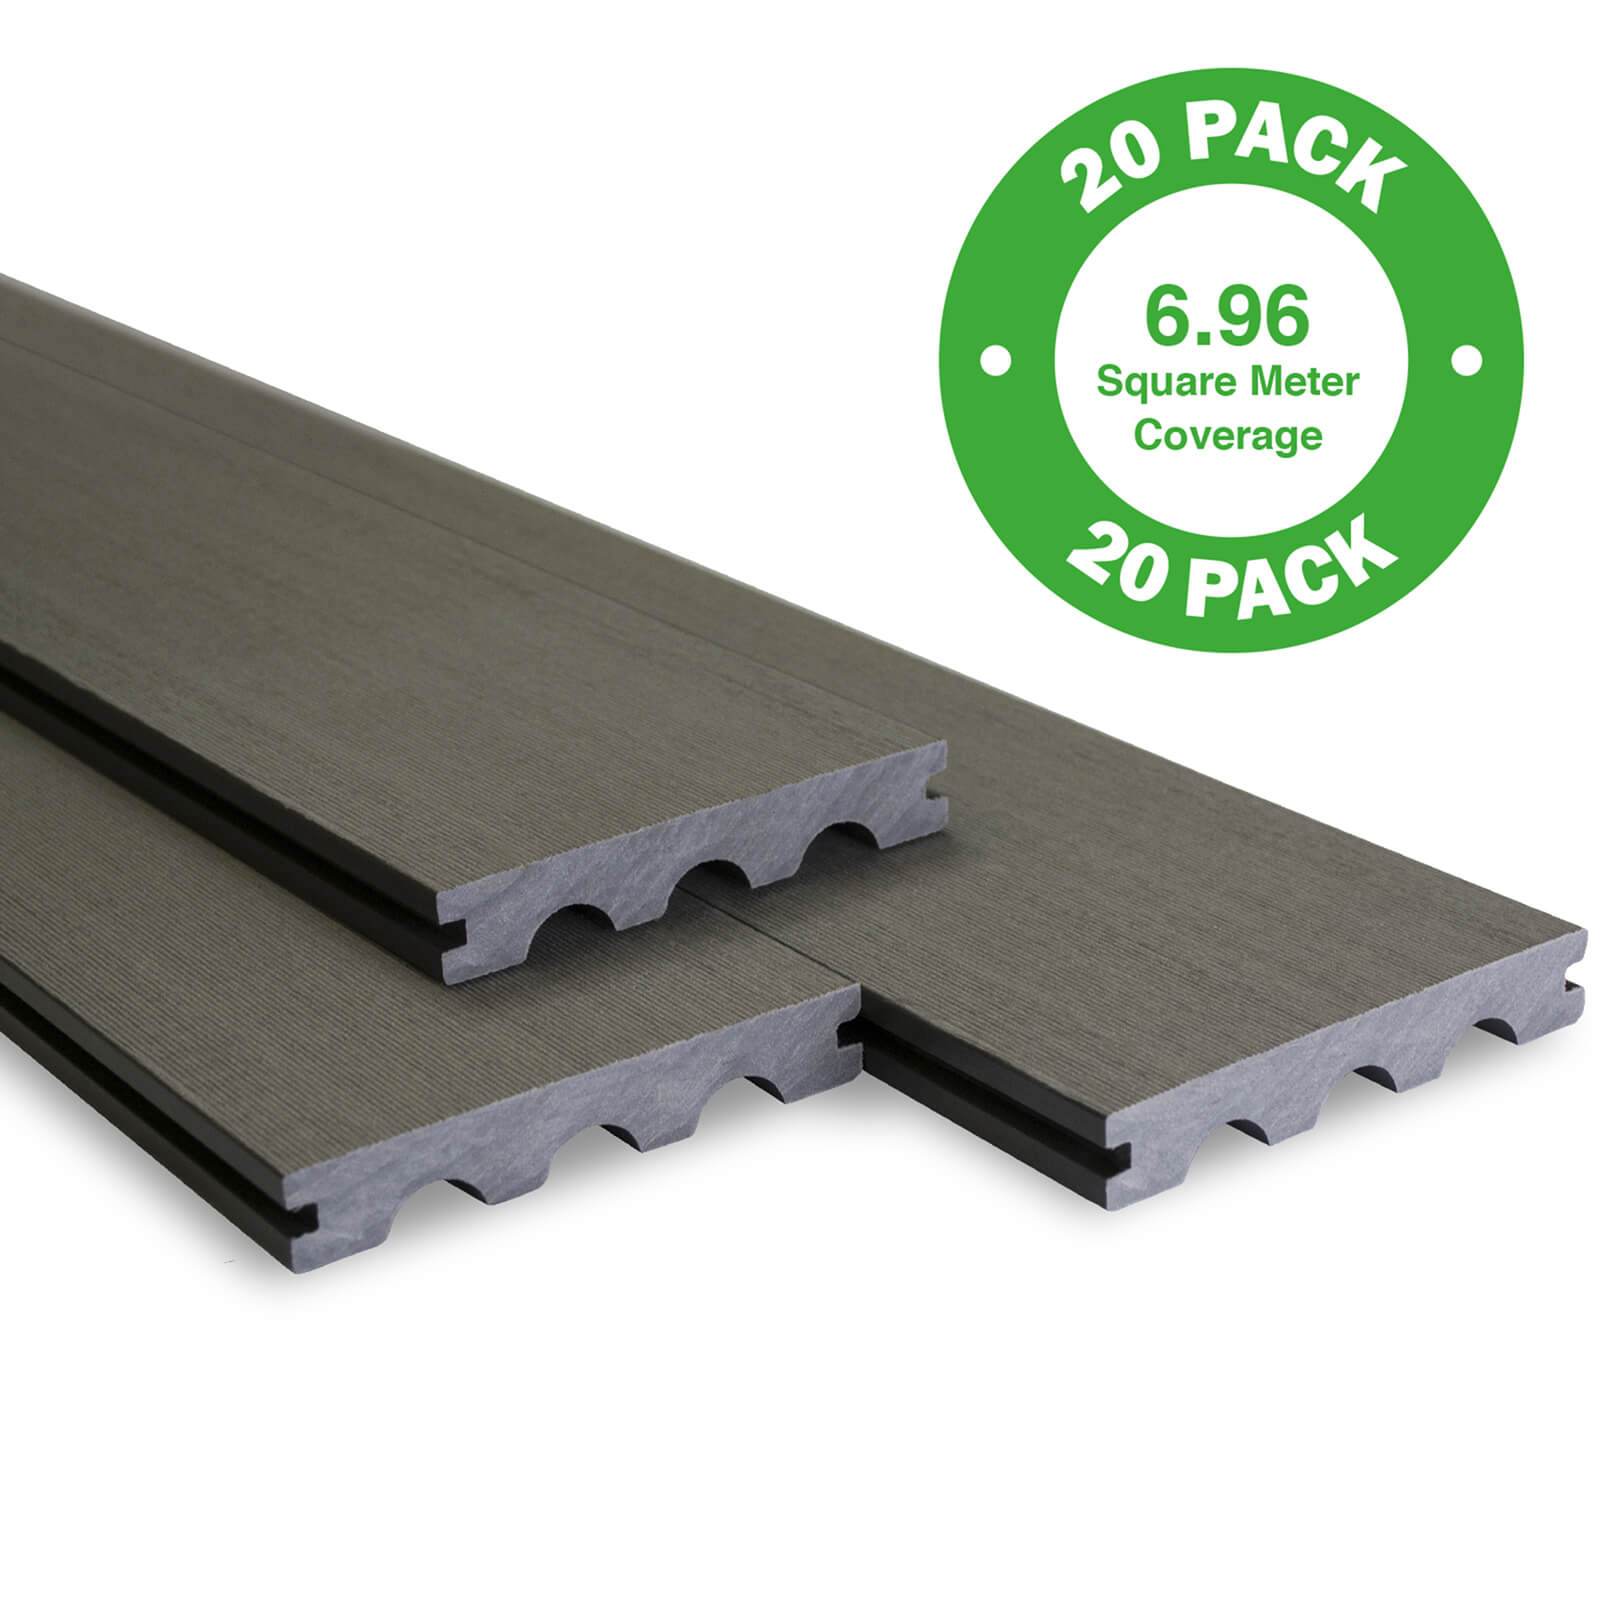 Photo of Bridge Board Composite Decking 20 Pack Grey - 6.96 M2